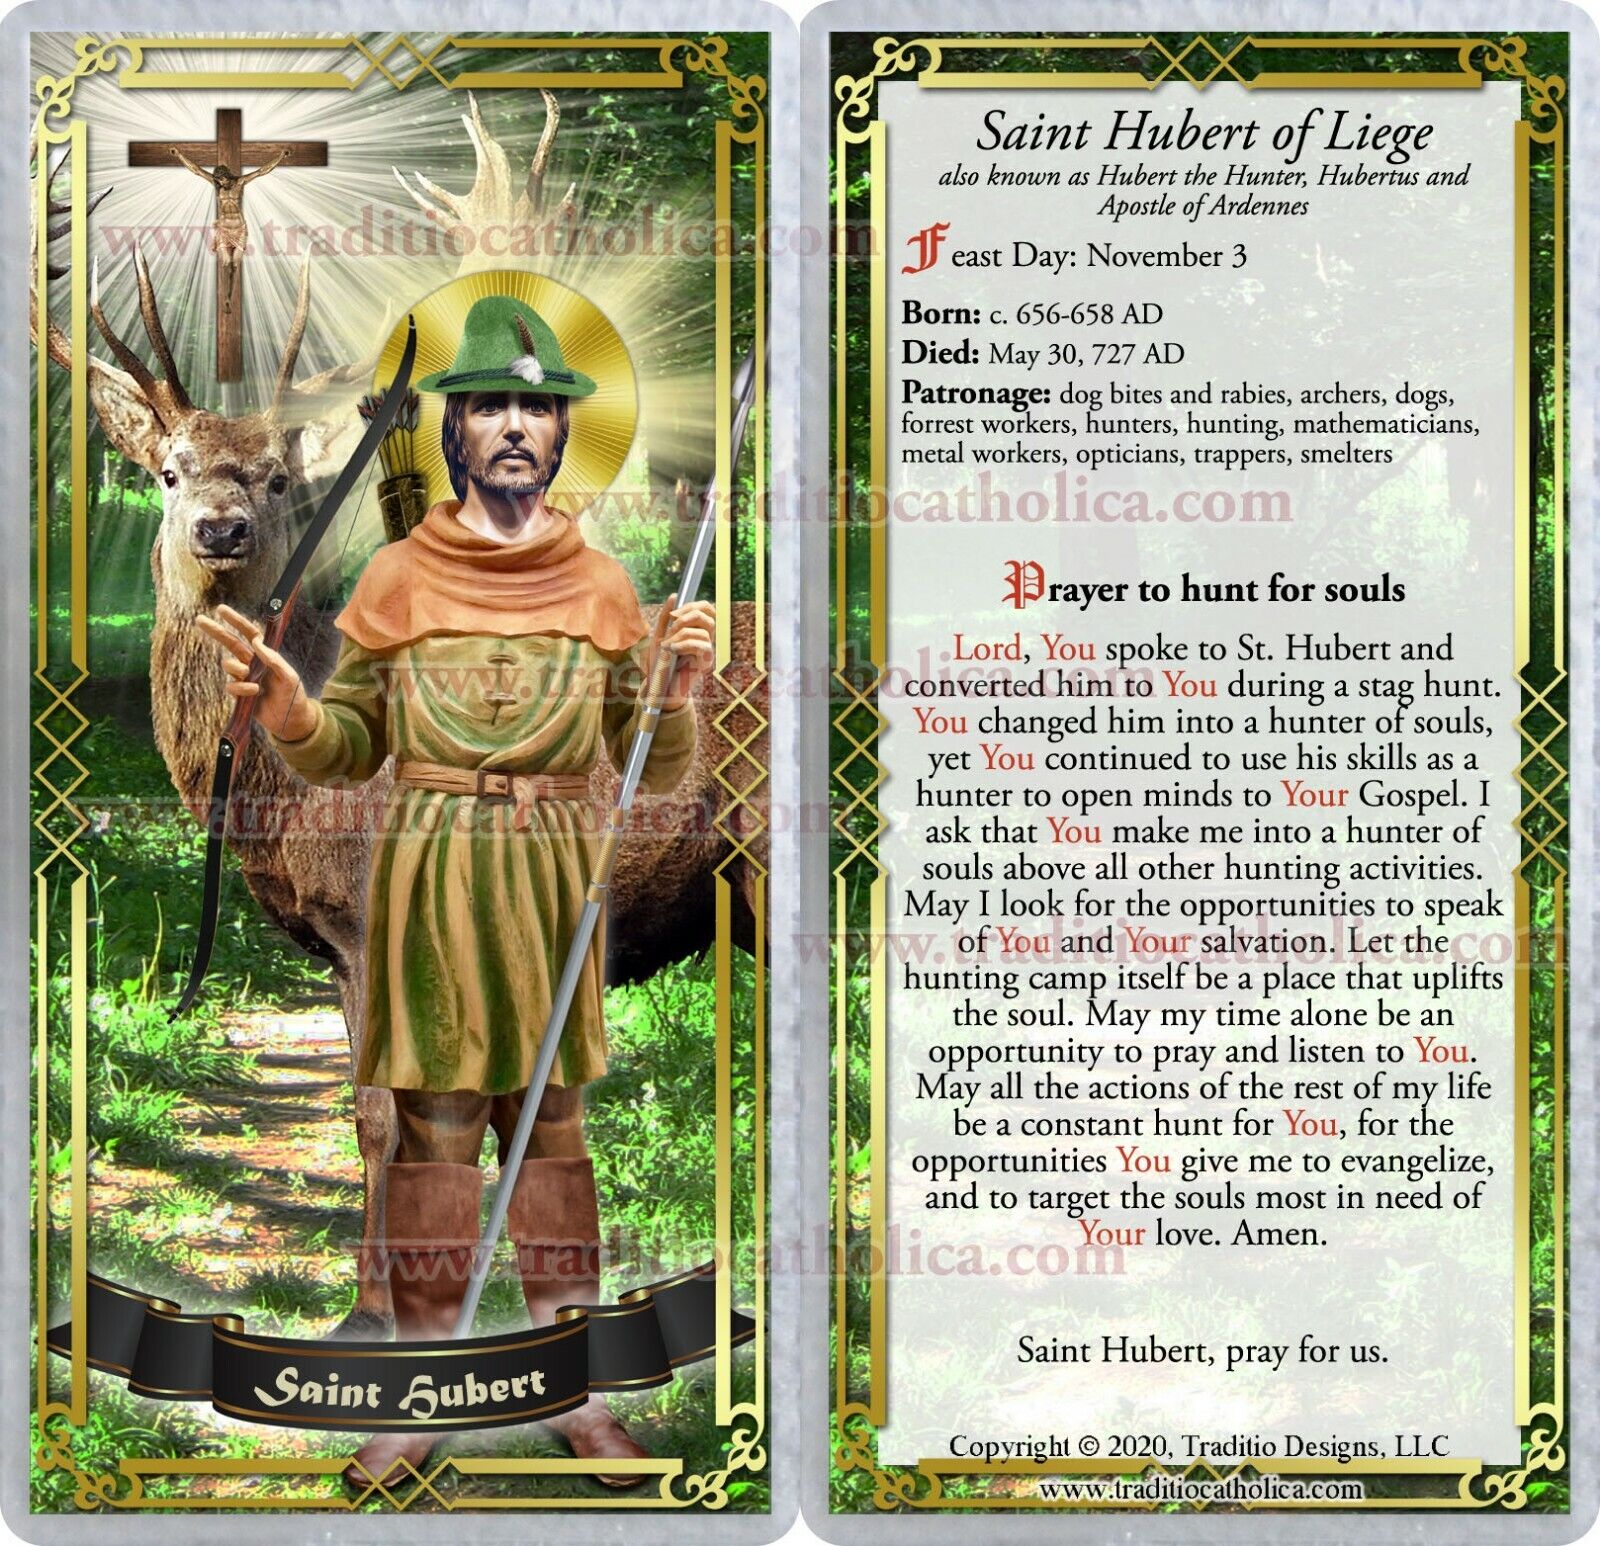 Saint Hubert, patron of hunters and hunting laminated Prayer card. St. Hubert